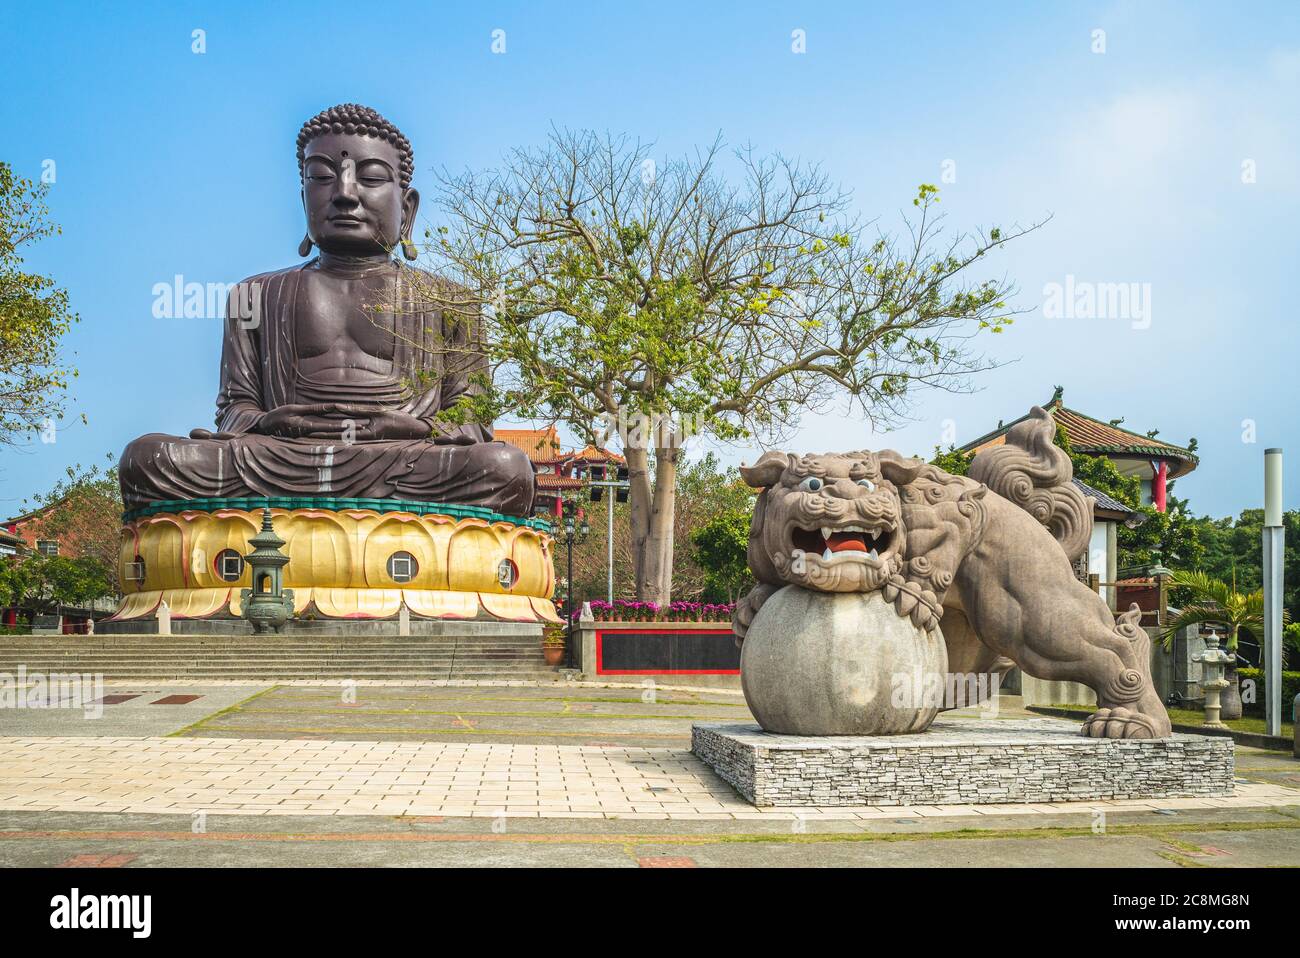 giant Buddhist statue in changhua, taiwan Stock Photo